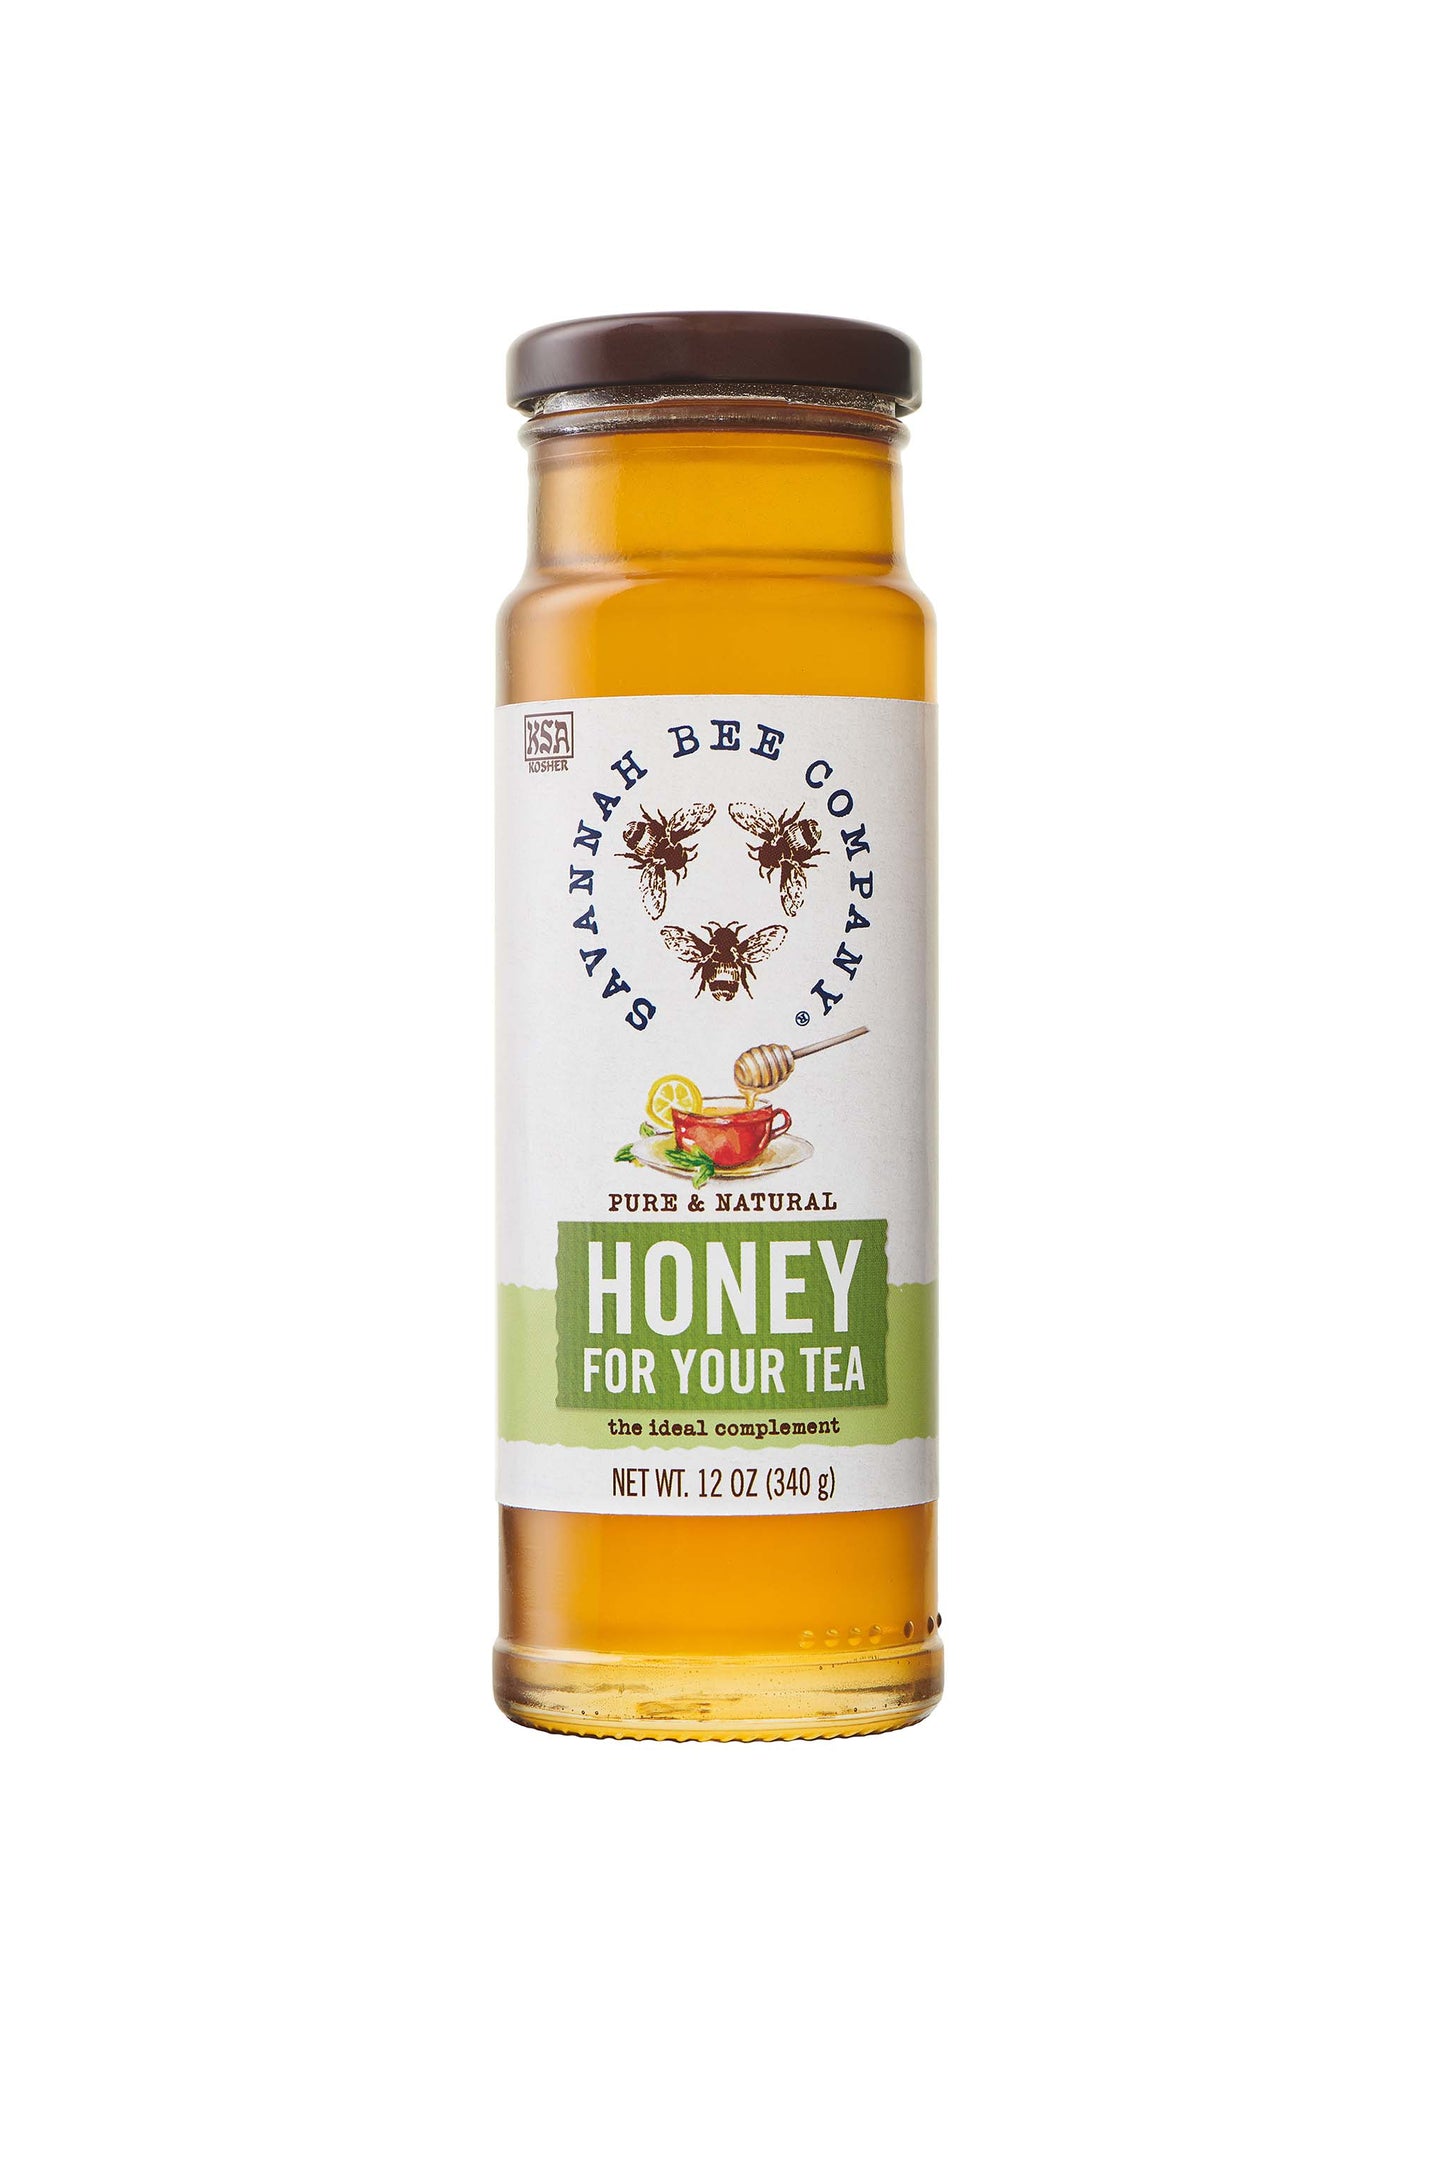 12 ounce honey for tea jar studio shot front facing